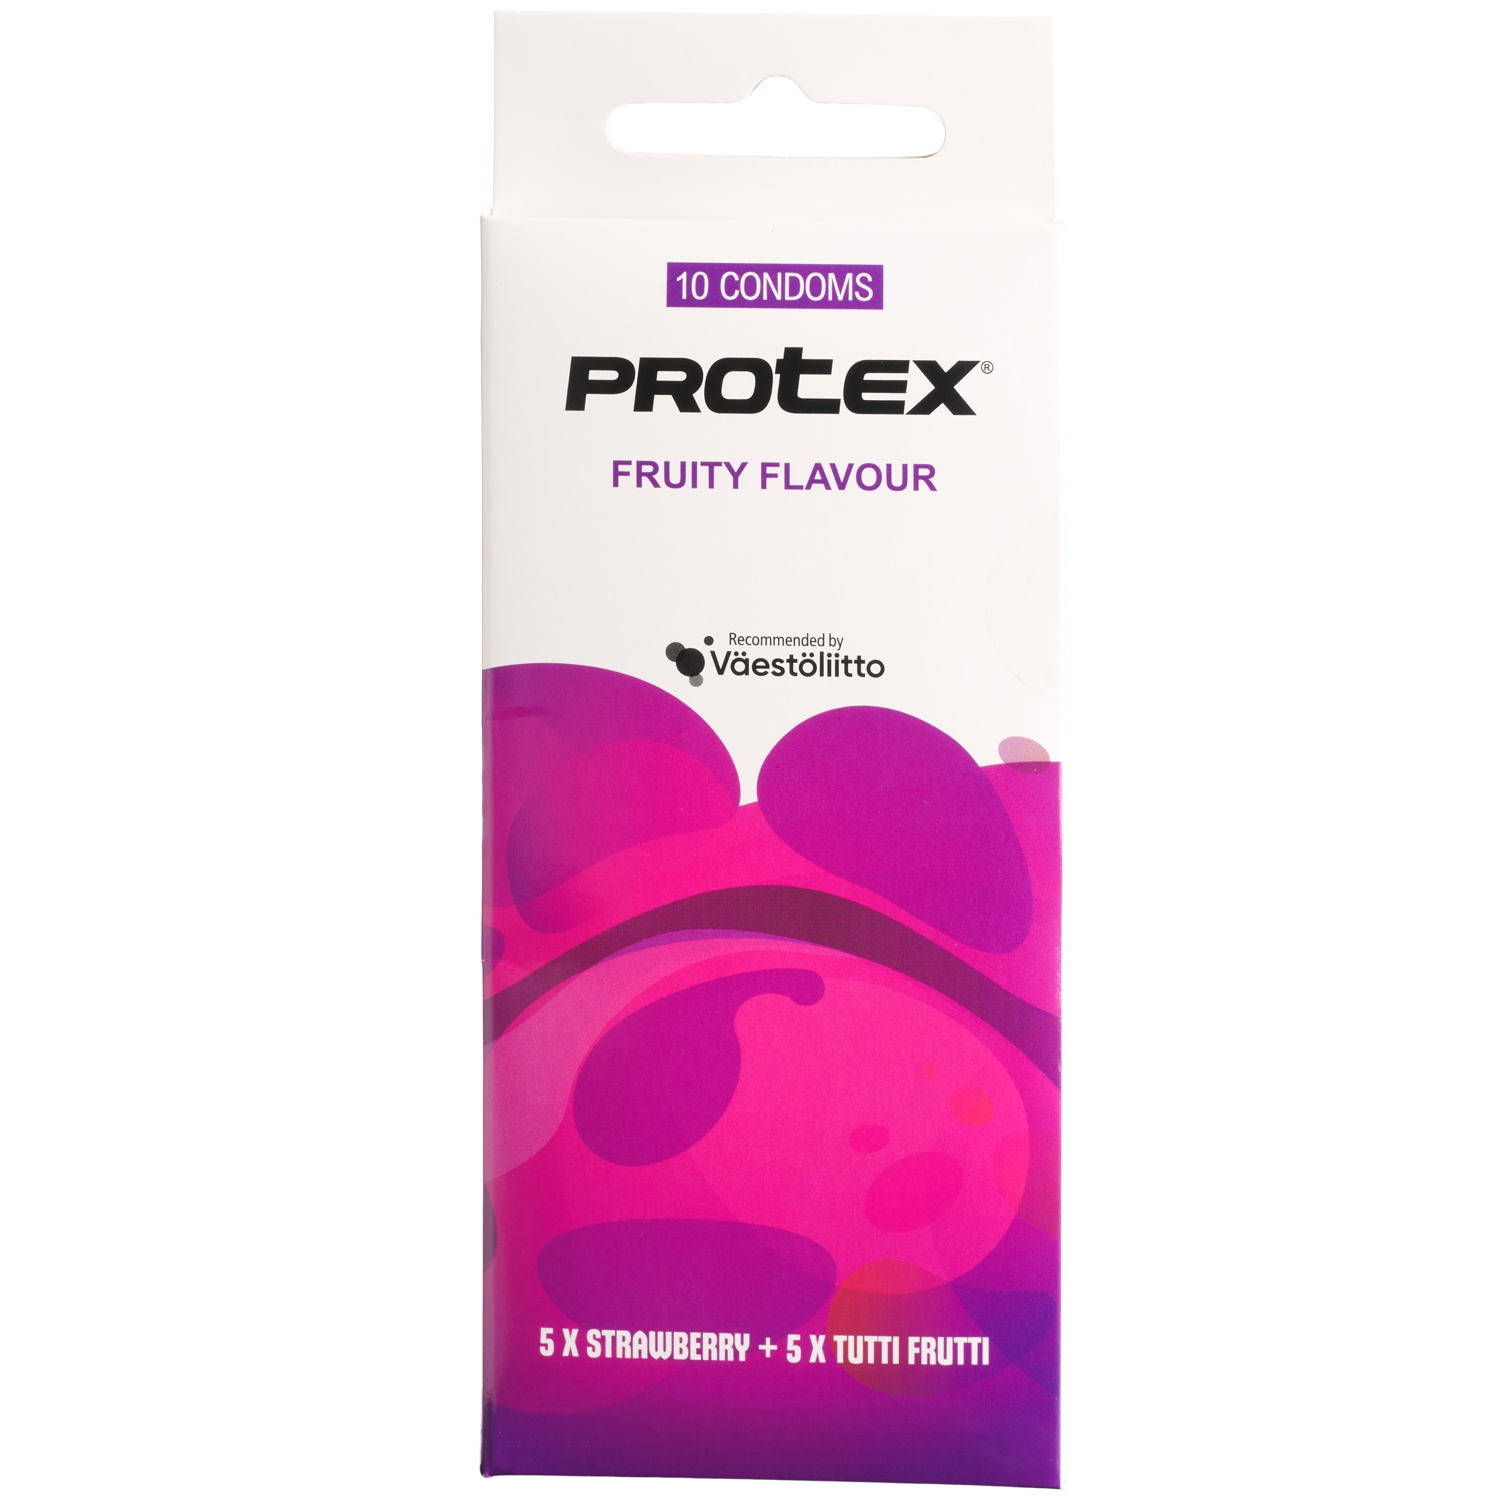 Protex Fruity Flavour Strawberry & Tutti Frutti Kondomer 10 stk   - Clear